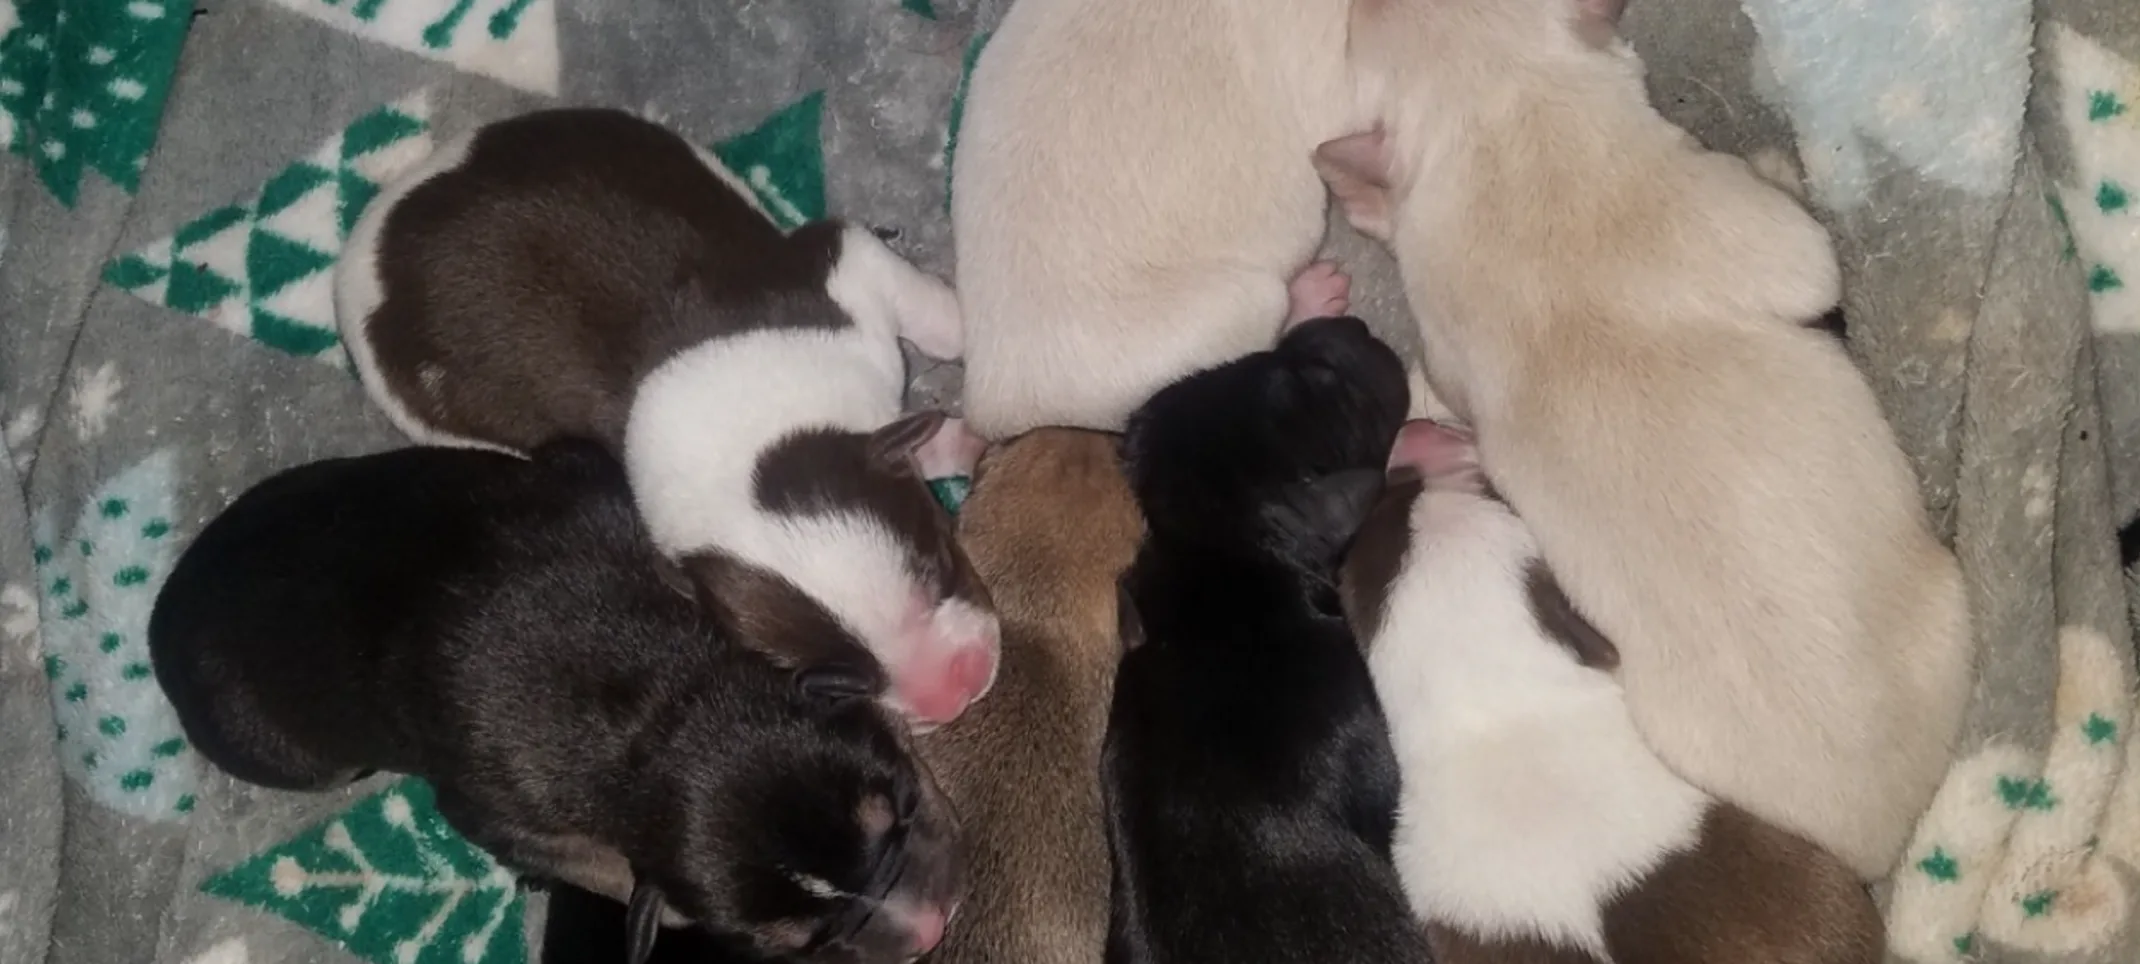 New born puppies litter